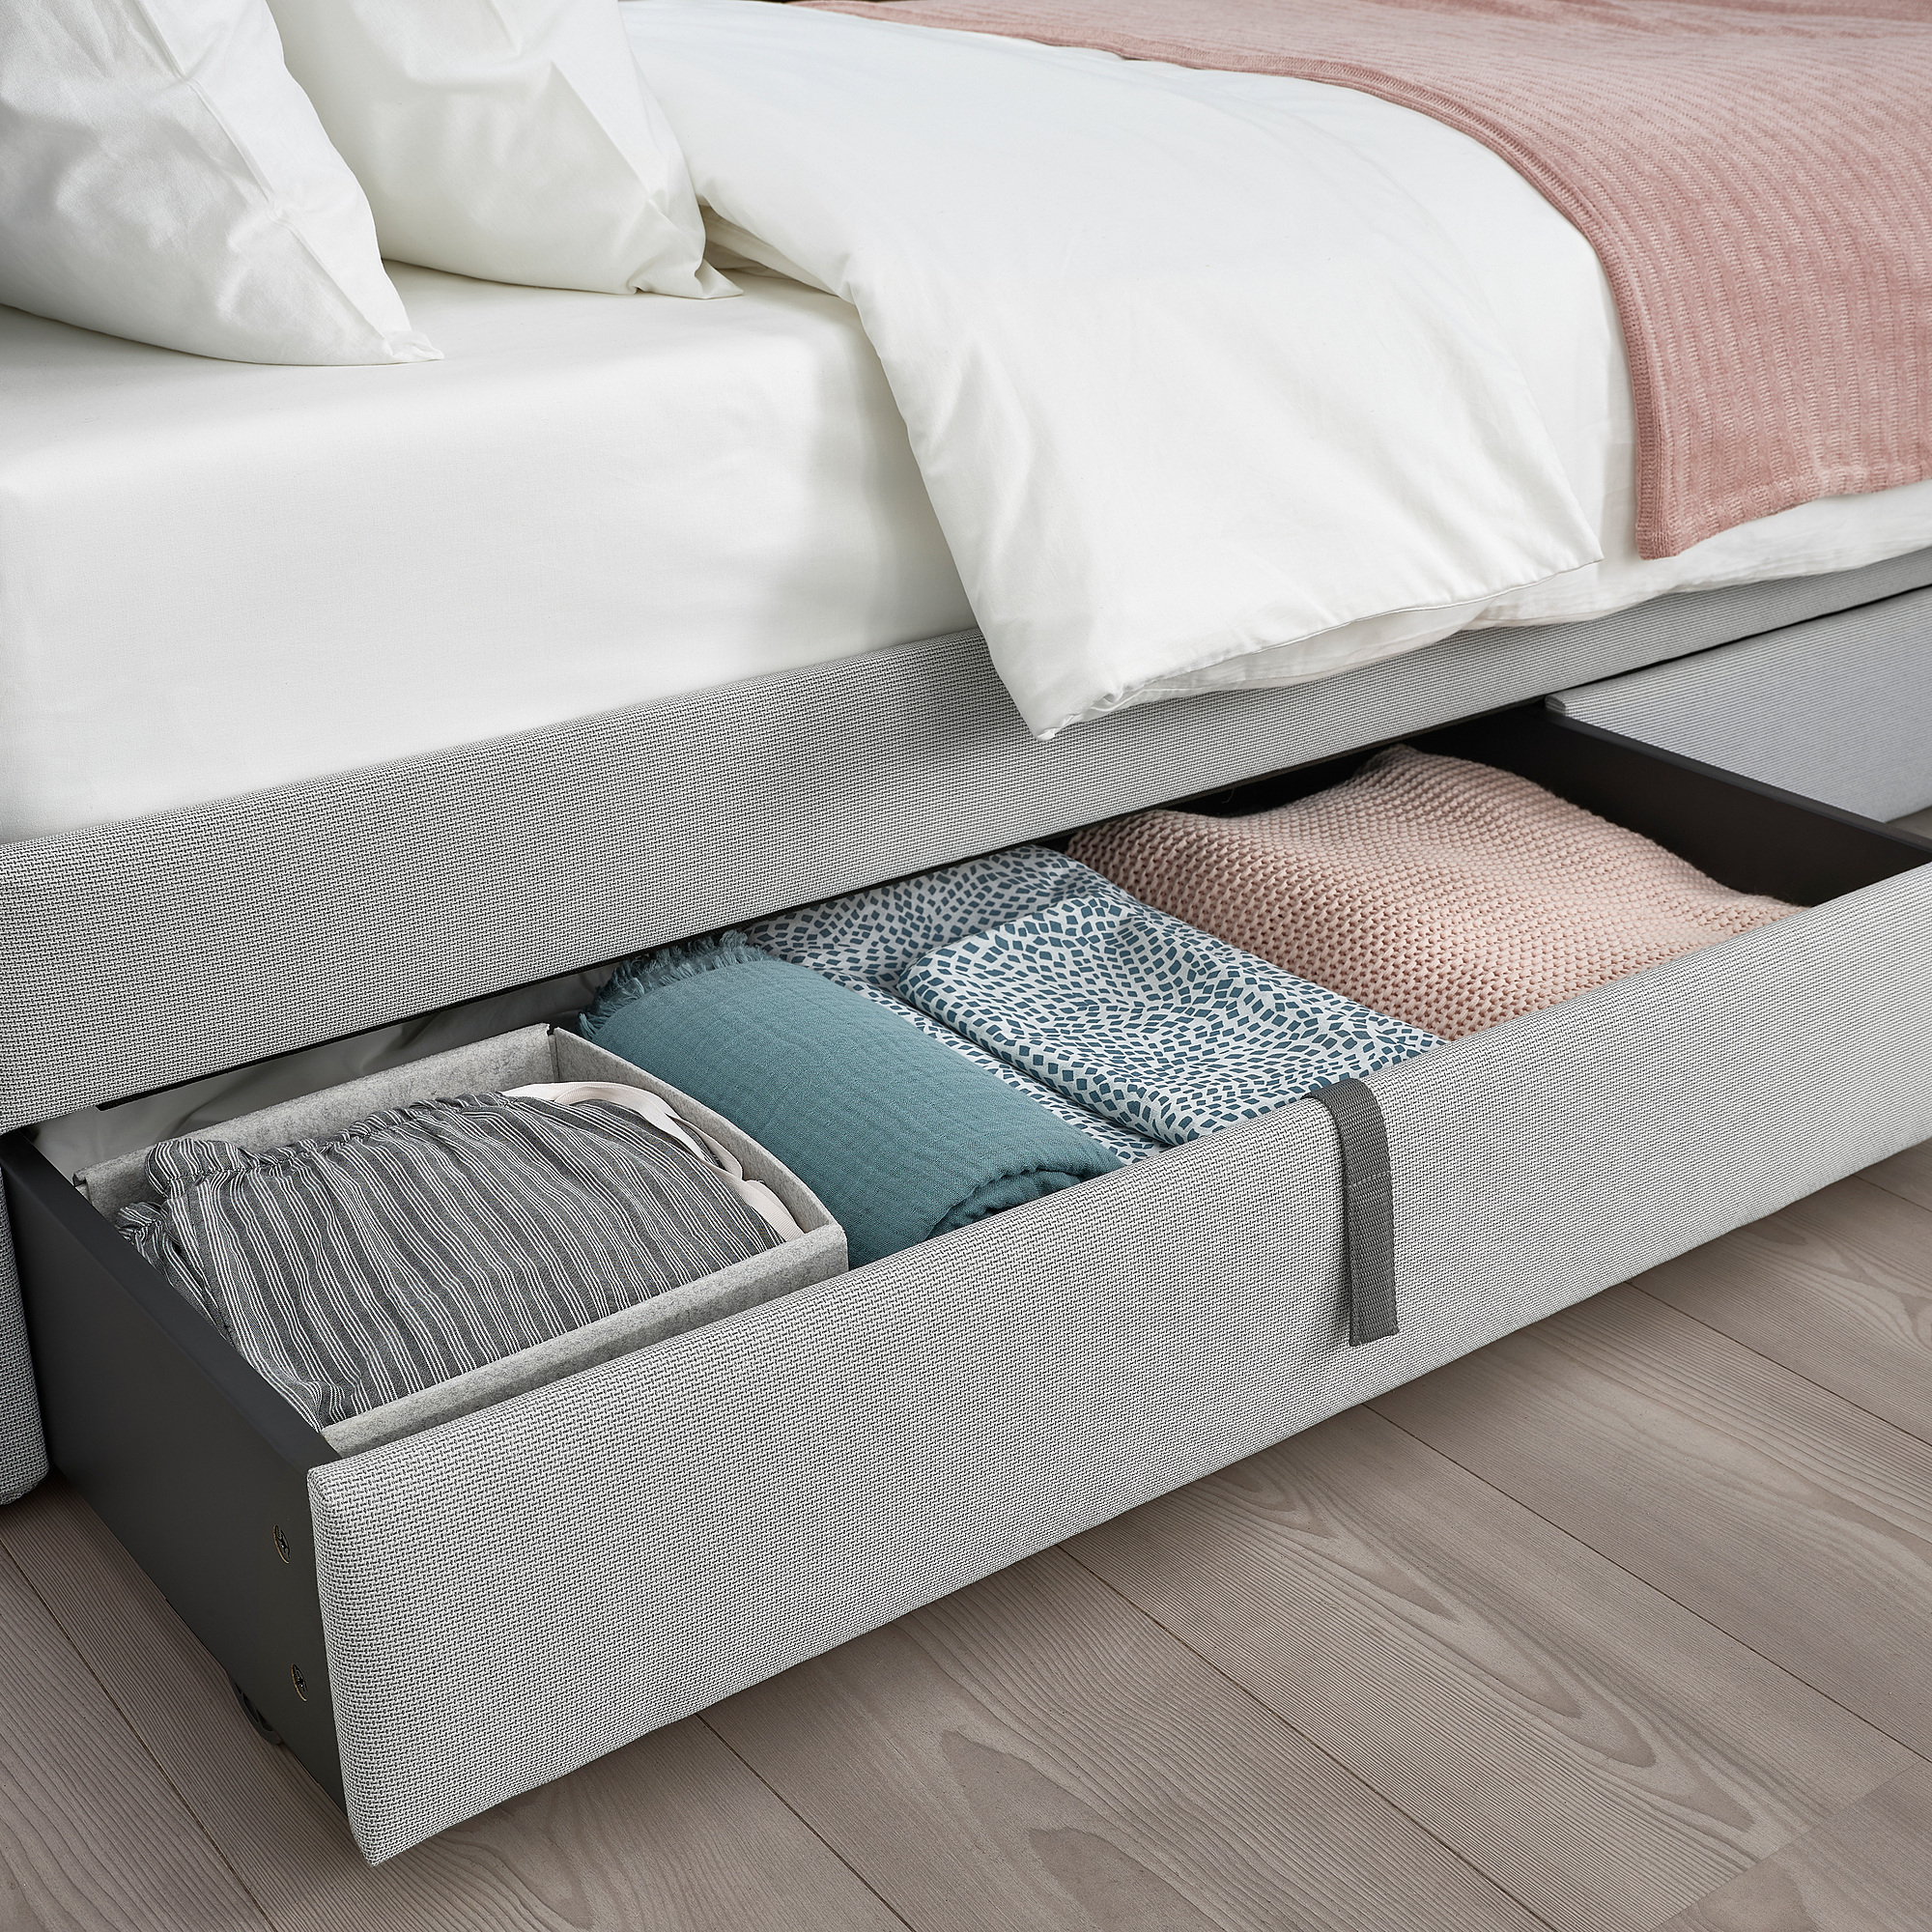 GLADSTAD upholstered bed storage box